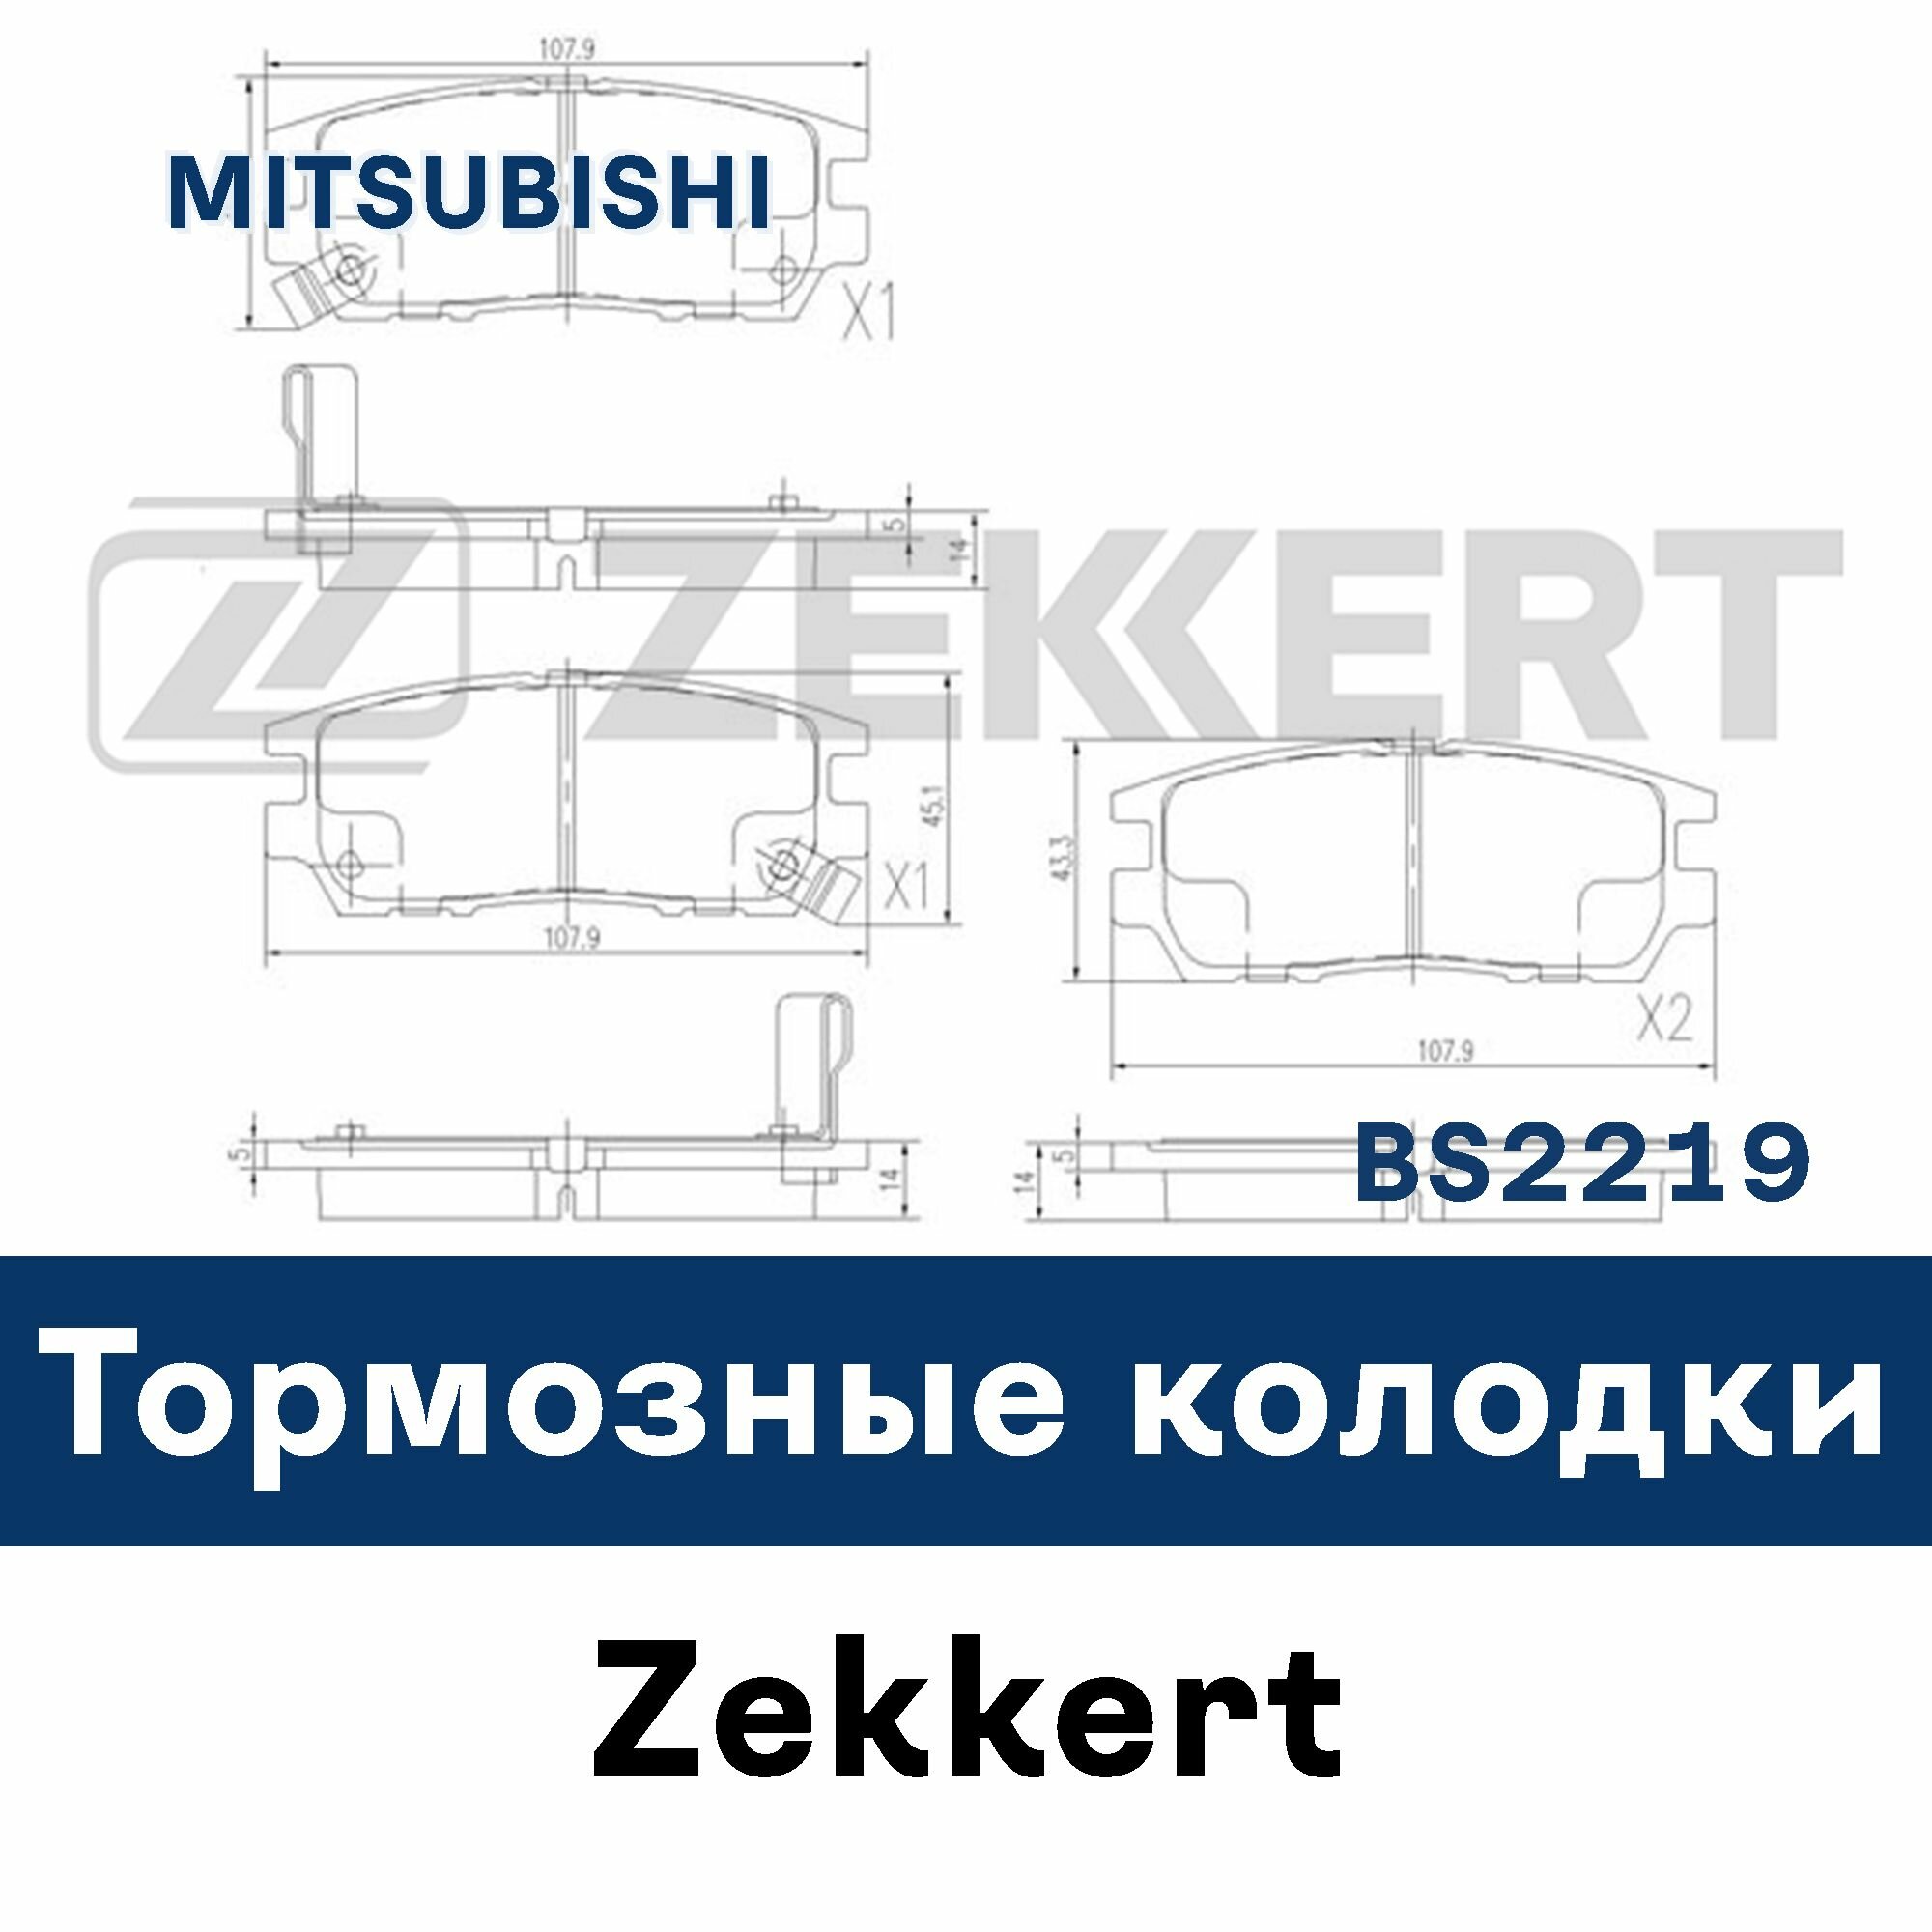 Тормозные колодки для MITSUBISHI BS2219 ZEKKERT